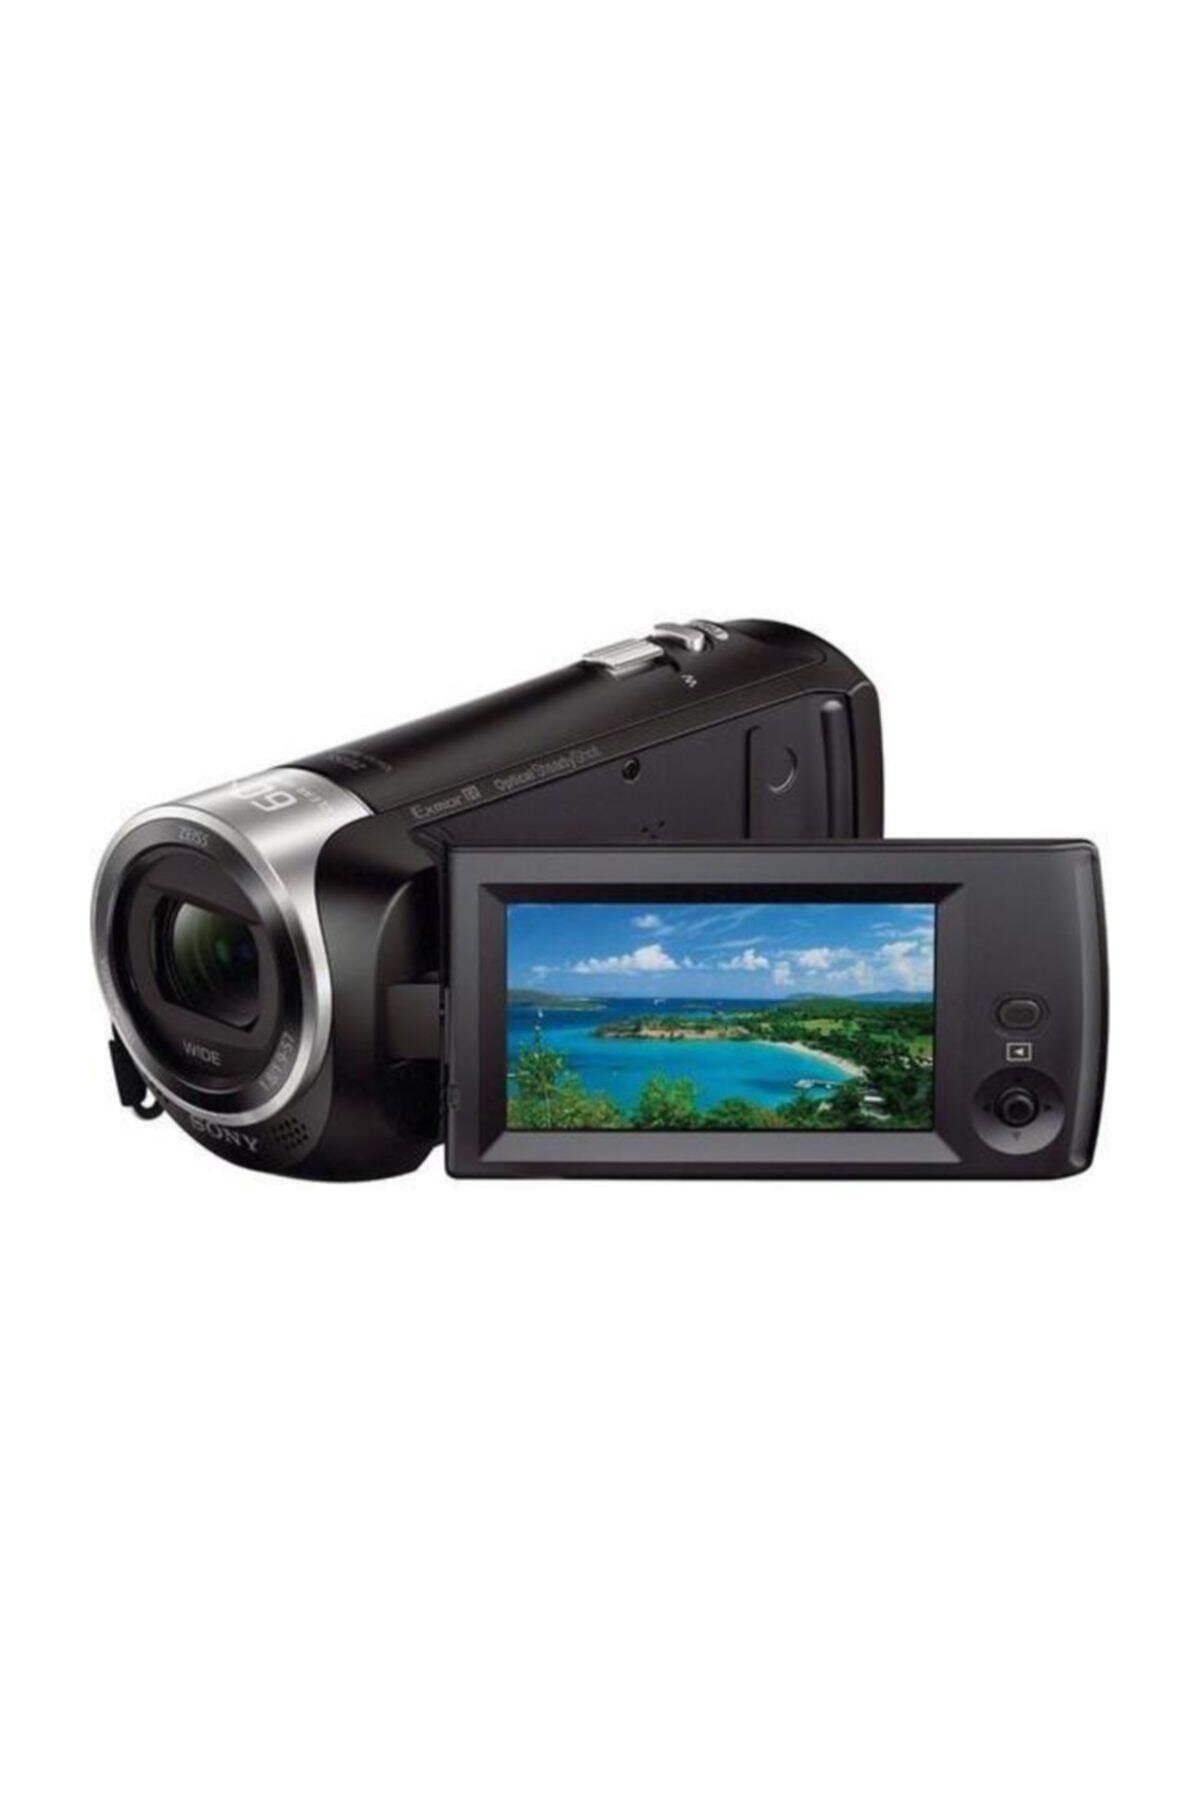 Sony Hdr-cx405 Exmor R® Cmos Sensörlü Full Hd Video Kamera